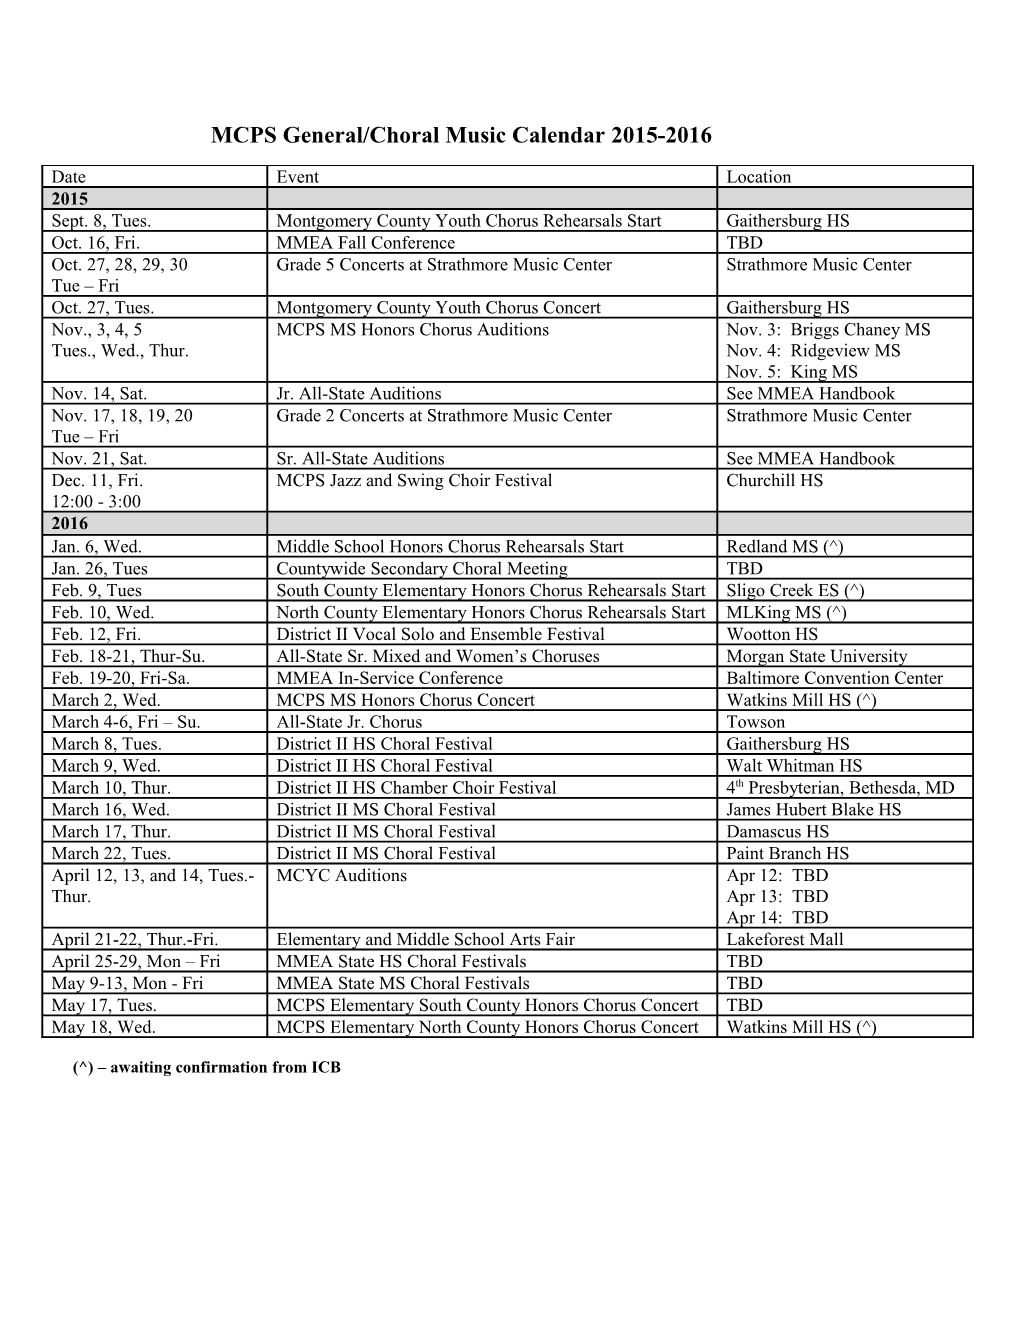 Instrumental Music Calendar 2003-2004